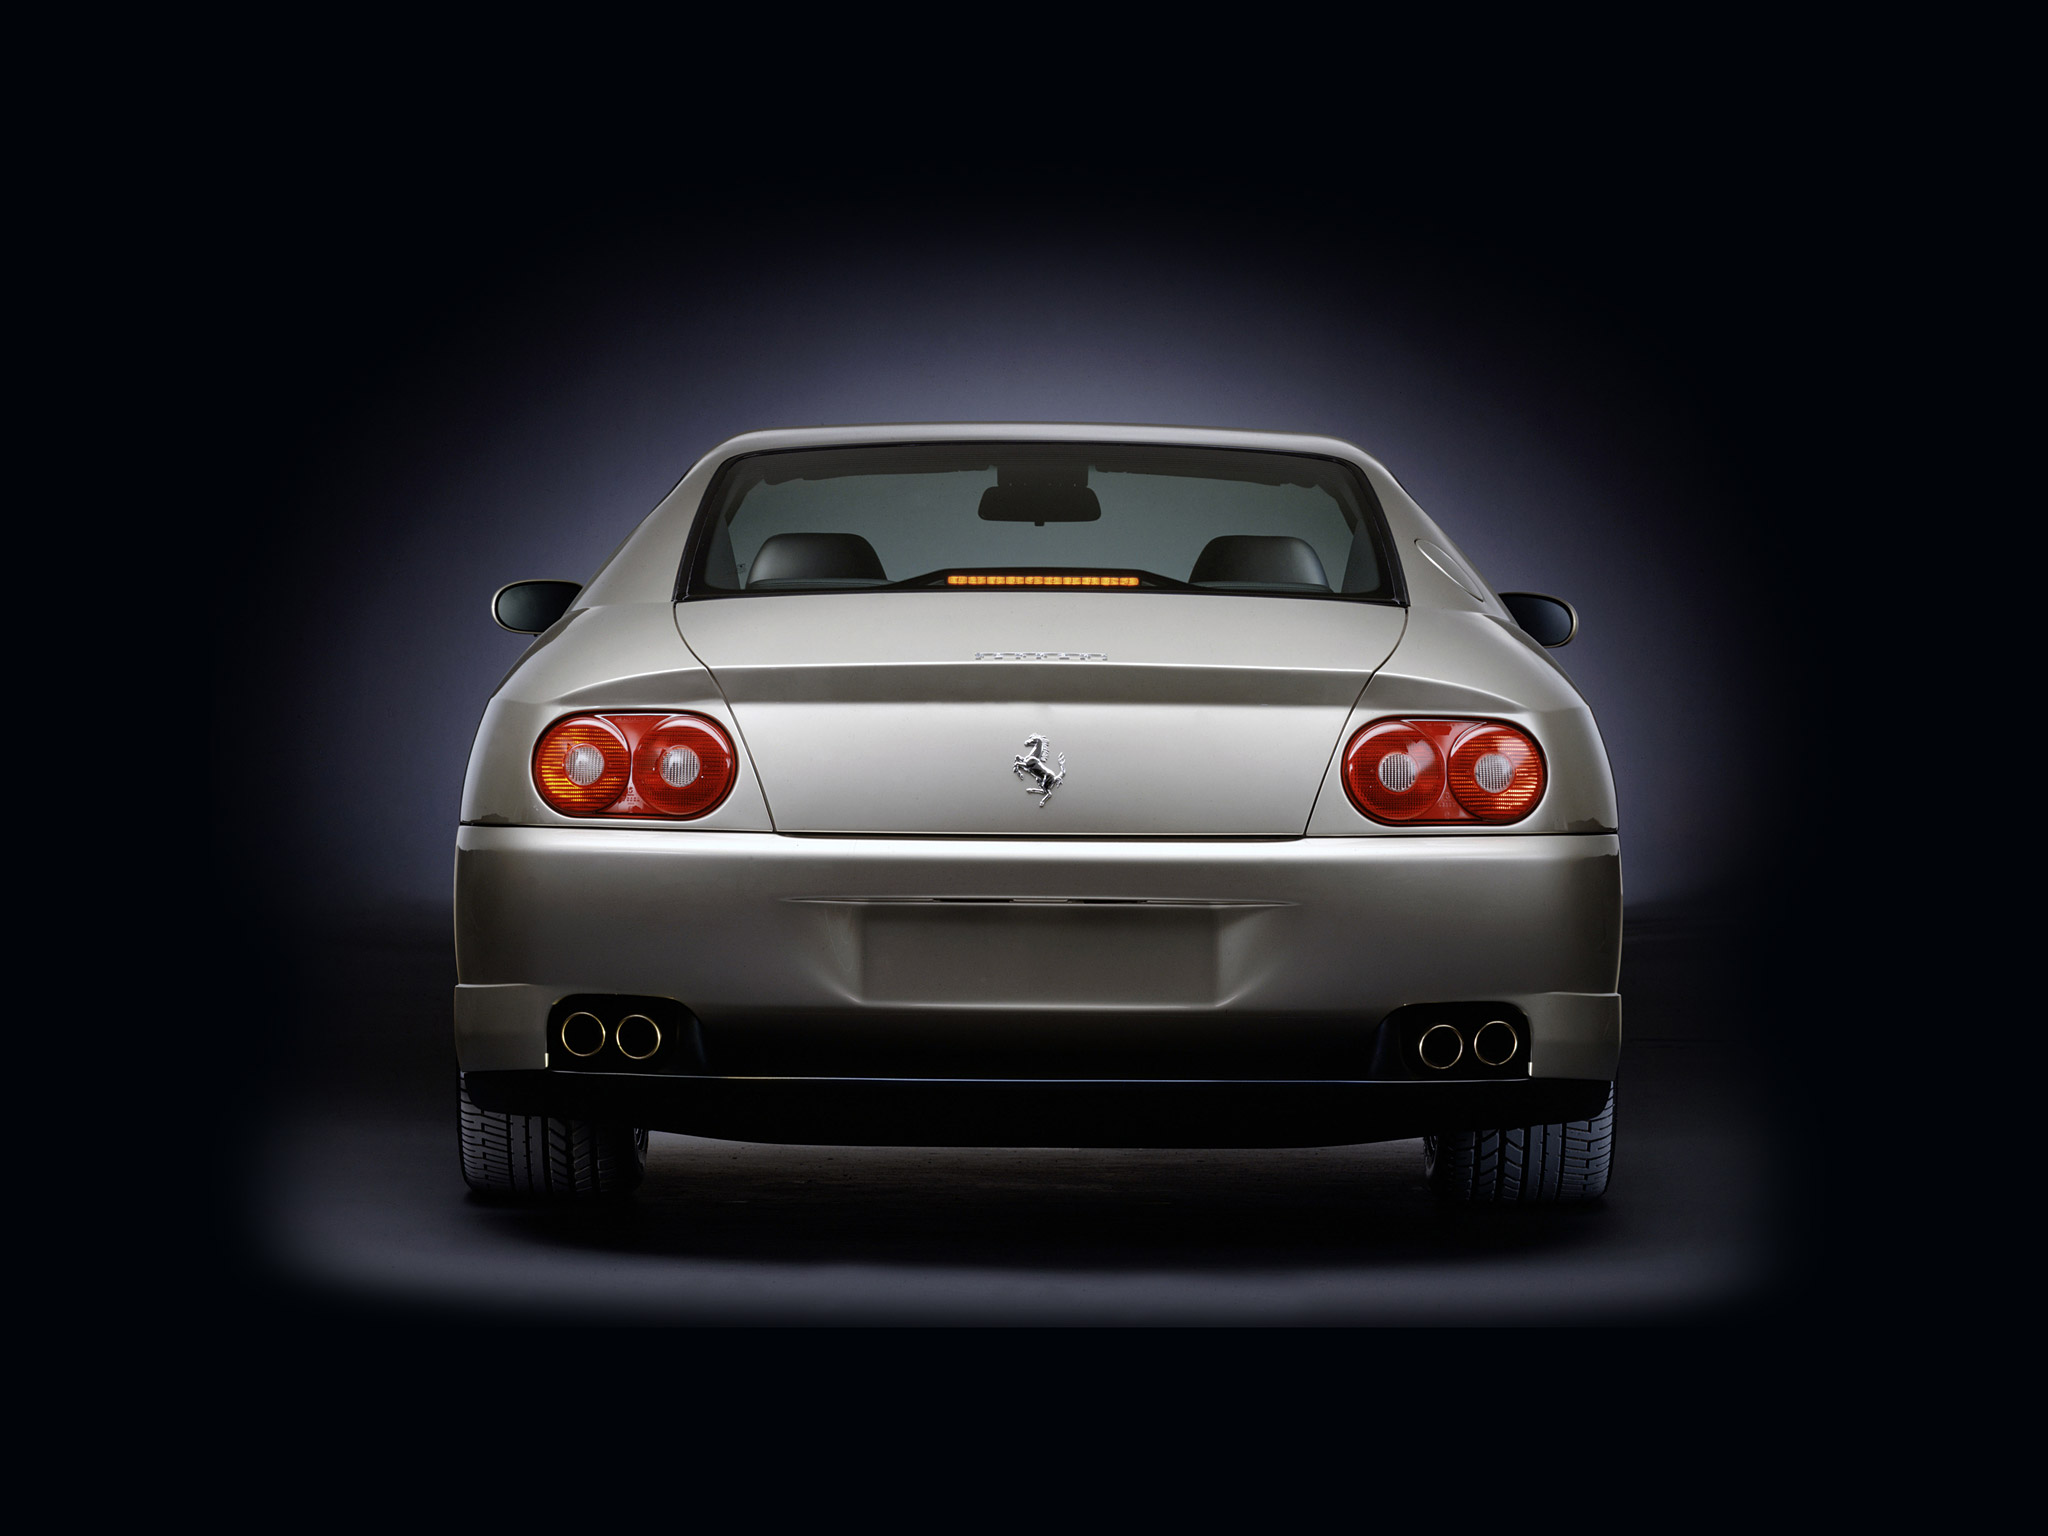  2001 Ferrari 456M GT Wallpaper.